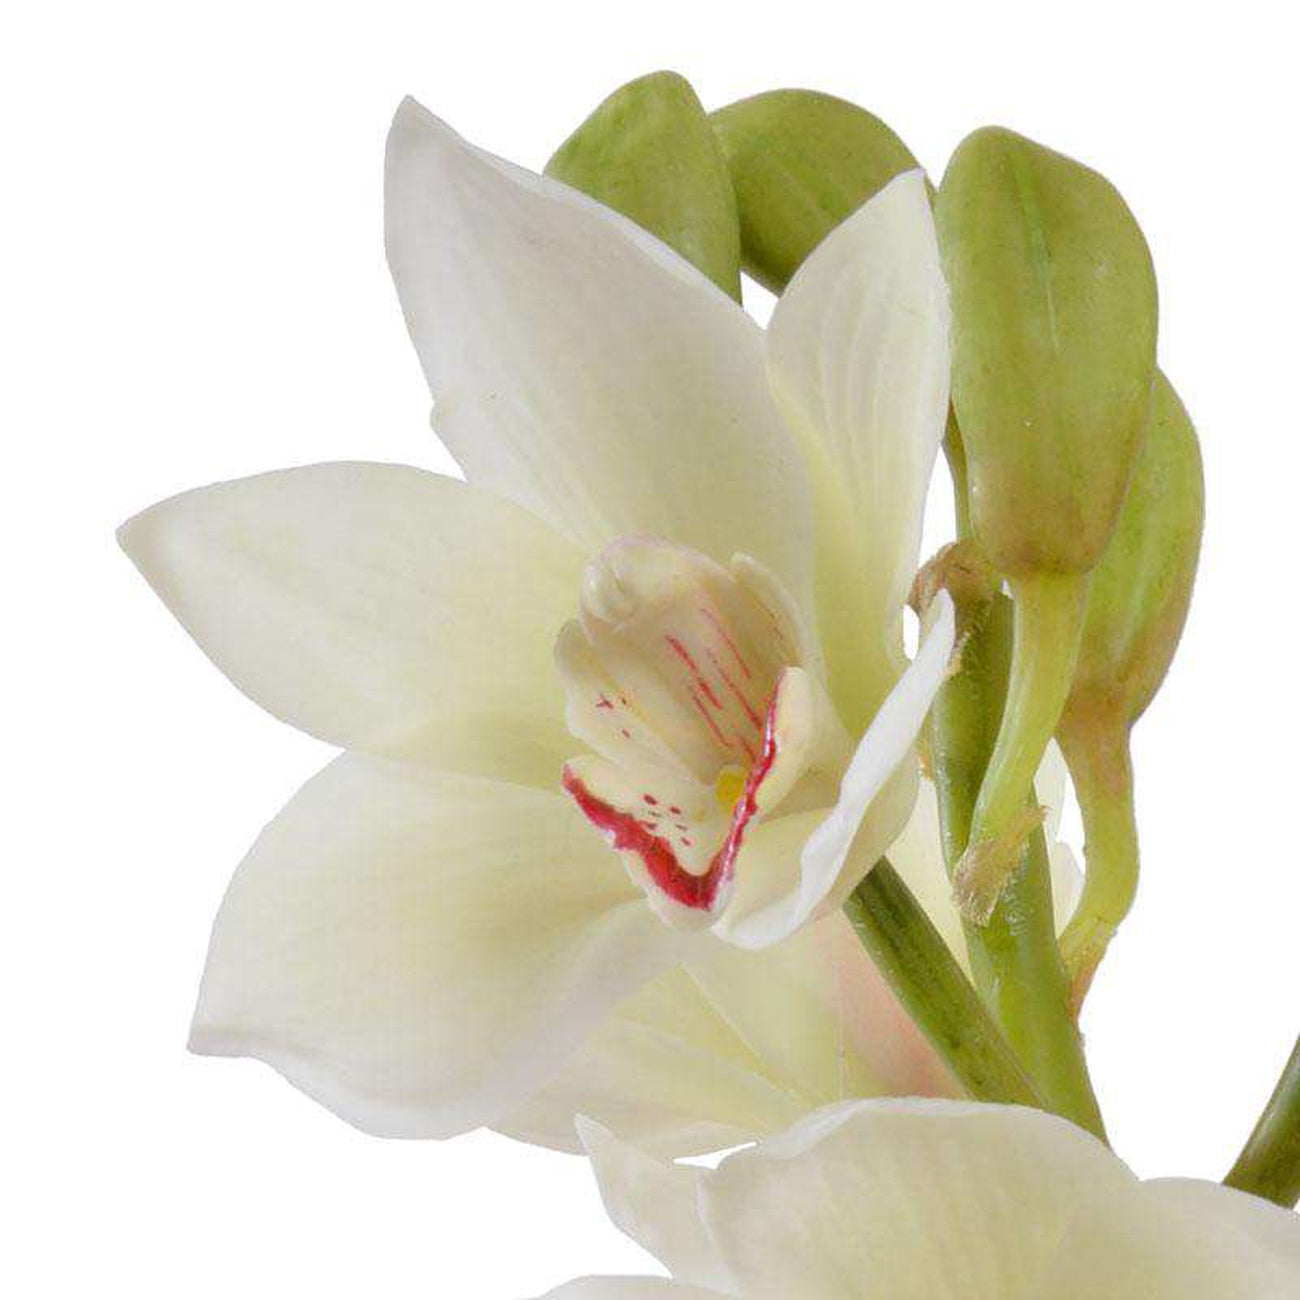 New Growth Designs, White Cymbidium Orchid Arrangement